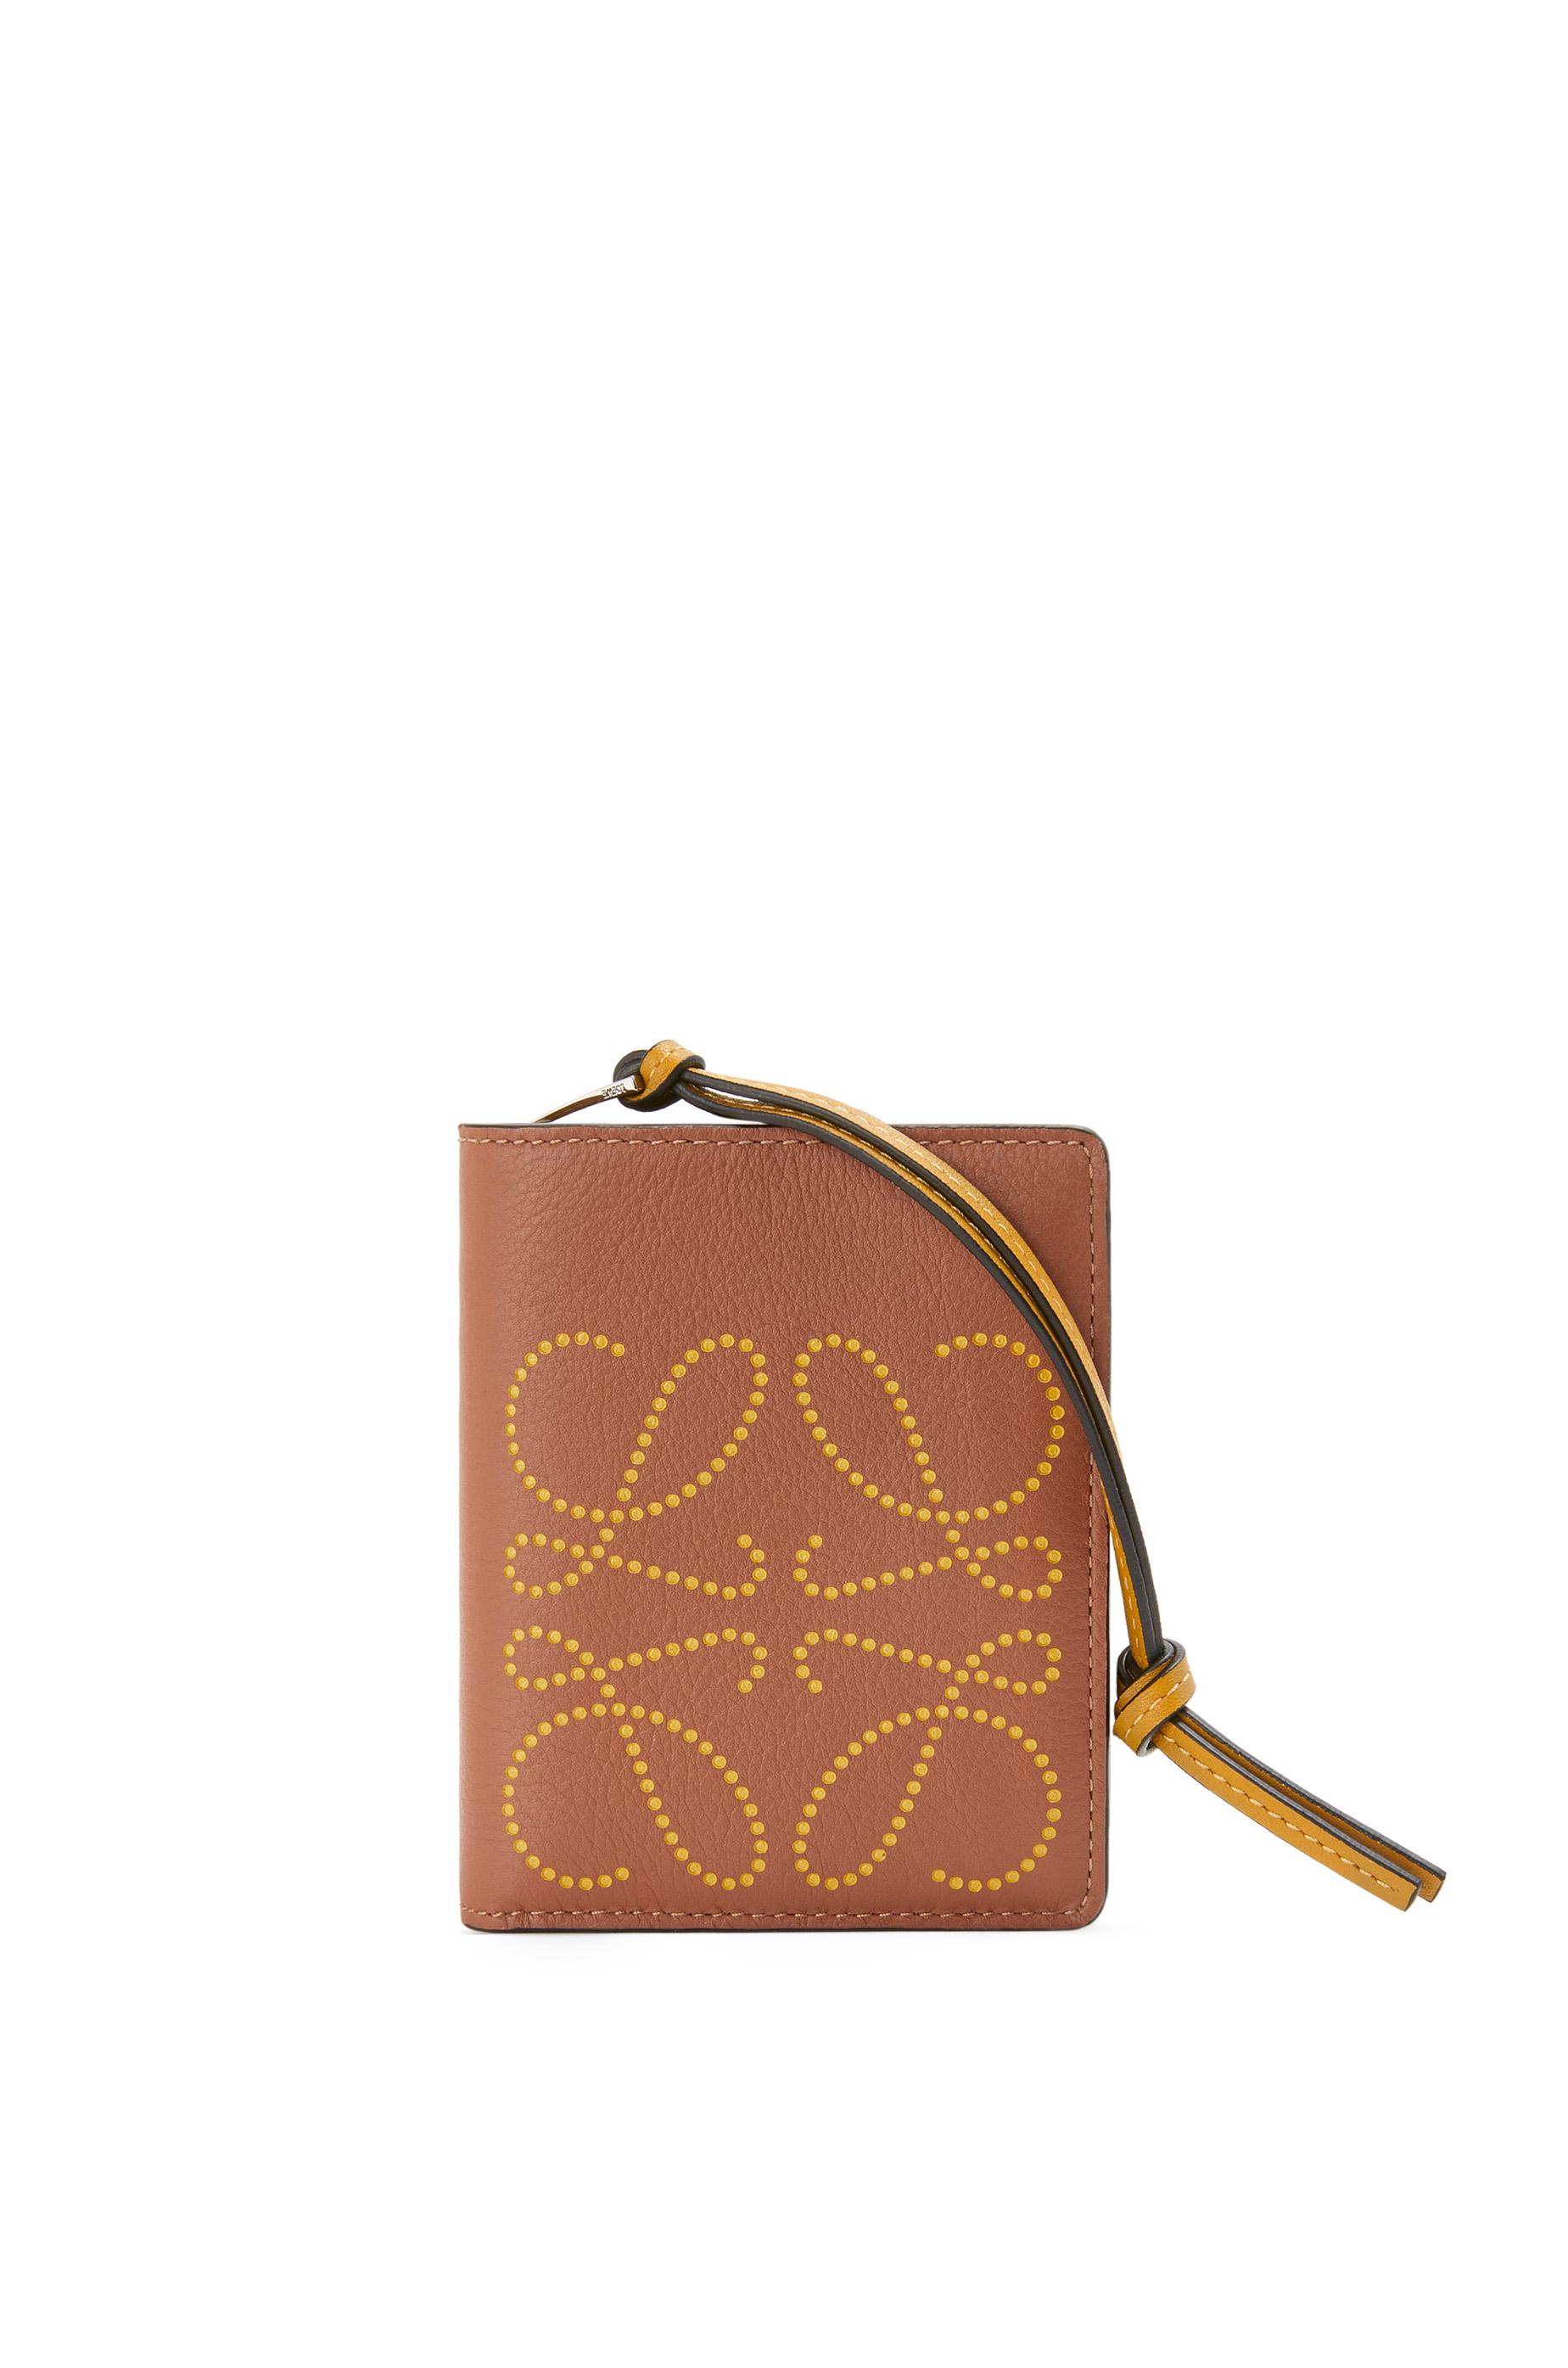 Brand compact zip wallet in classic calfskin by LOEWE